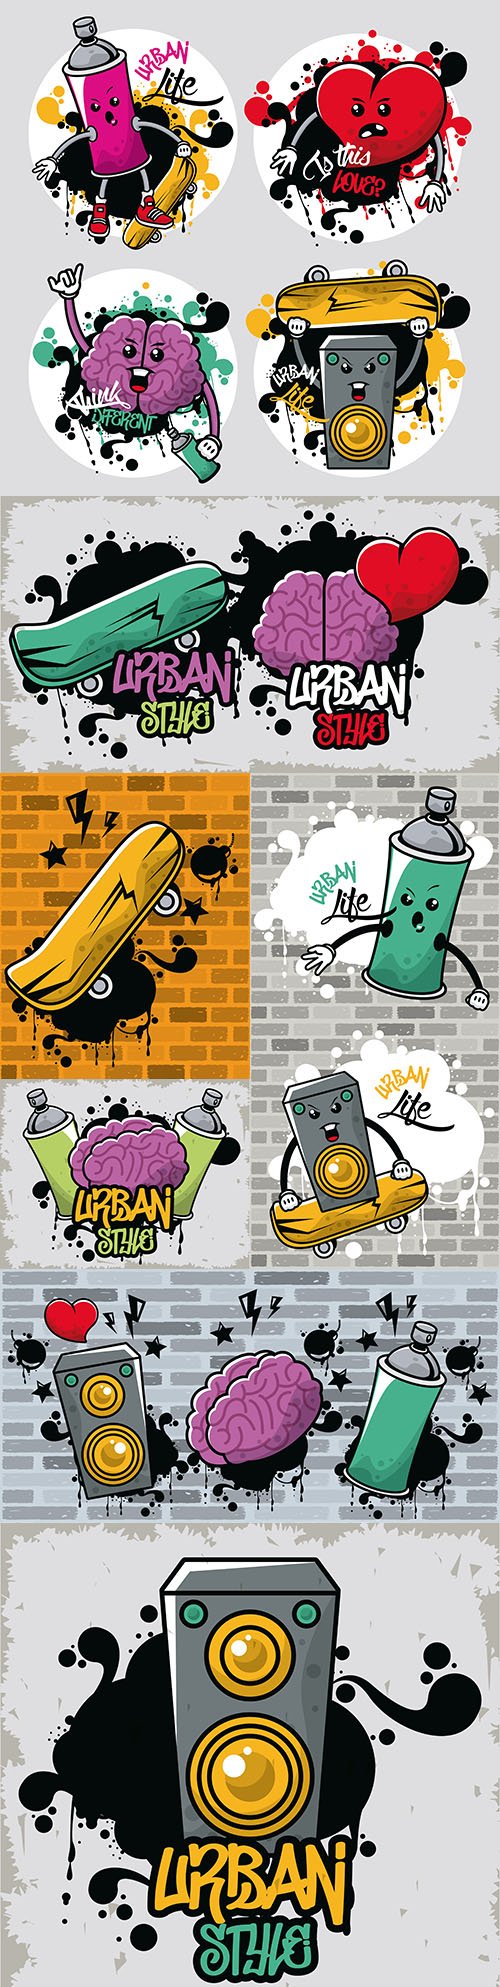 Urban style graffiti with skateboarding and brain